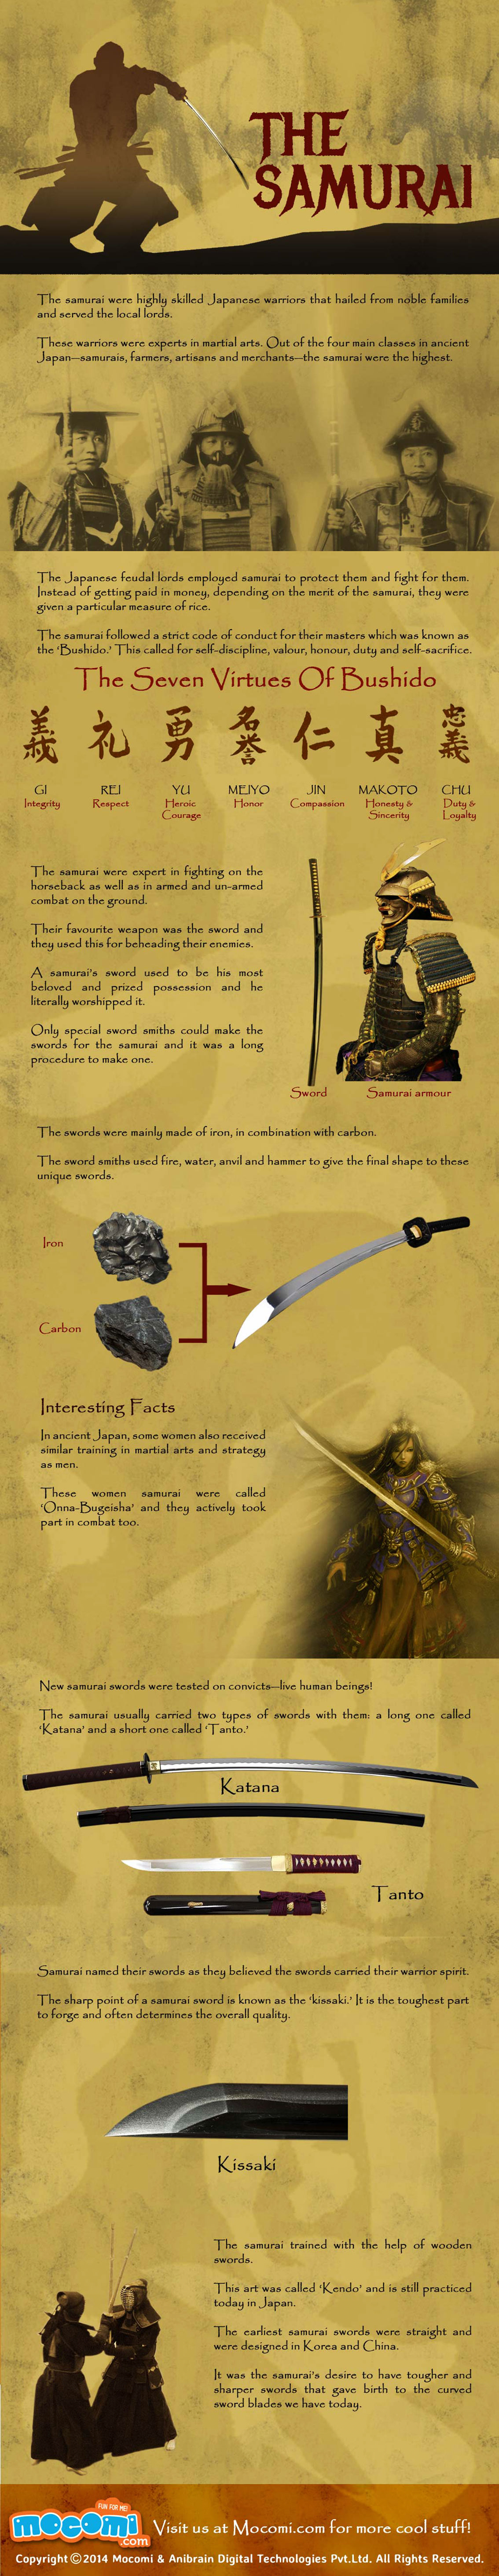 Brief History of Samurai Warriors Infographic